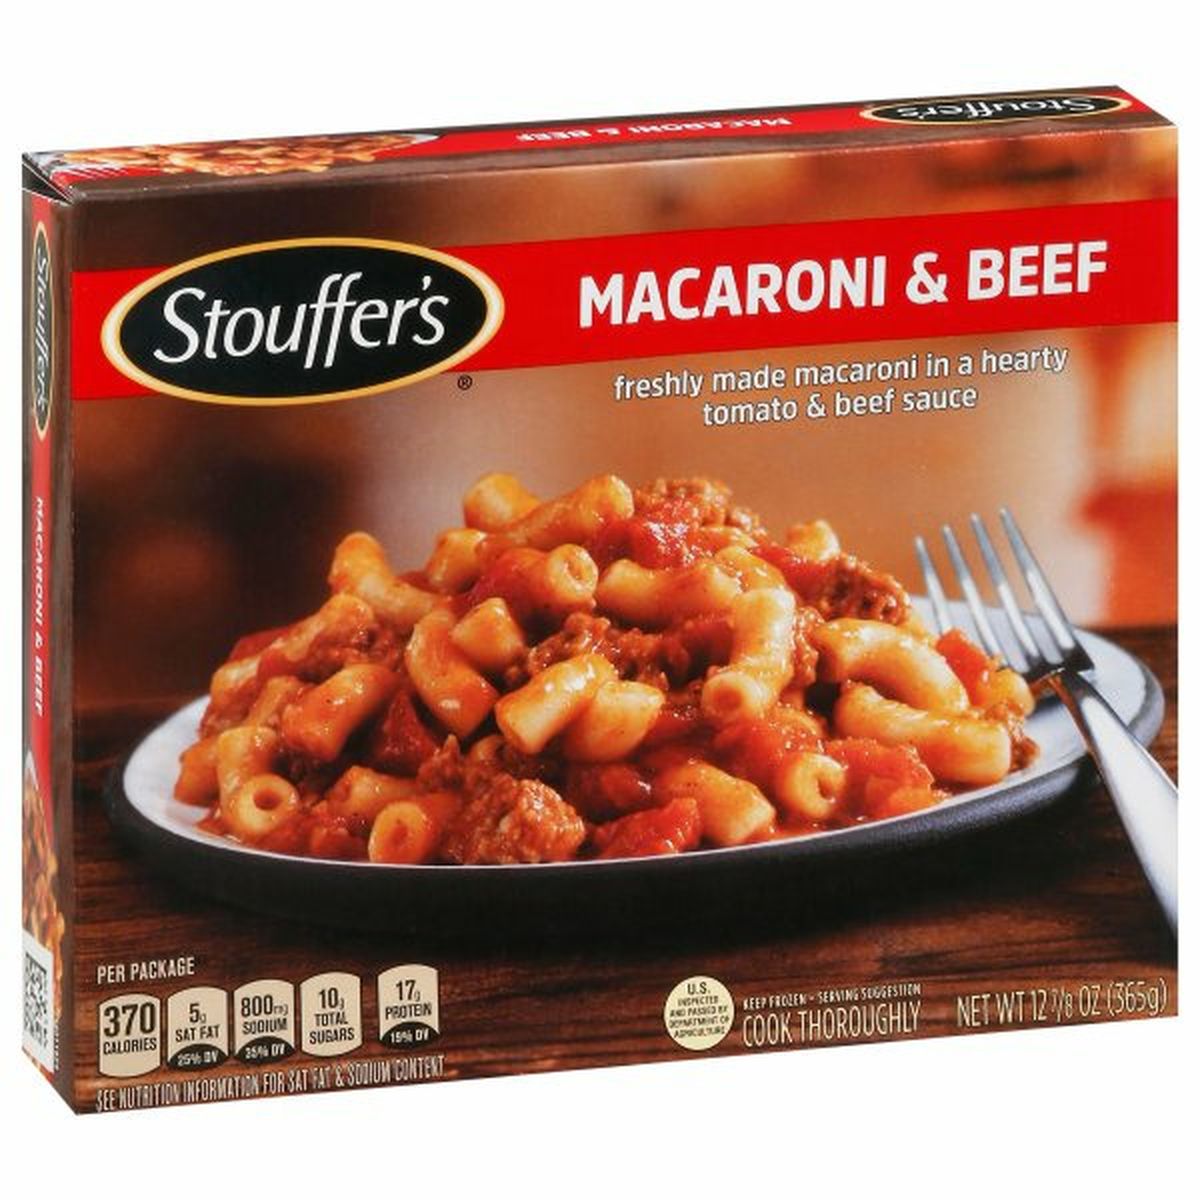 Calories in Stouffer's Macaroni & Beef